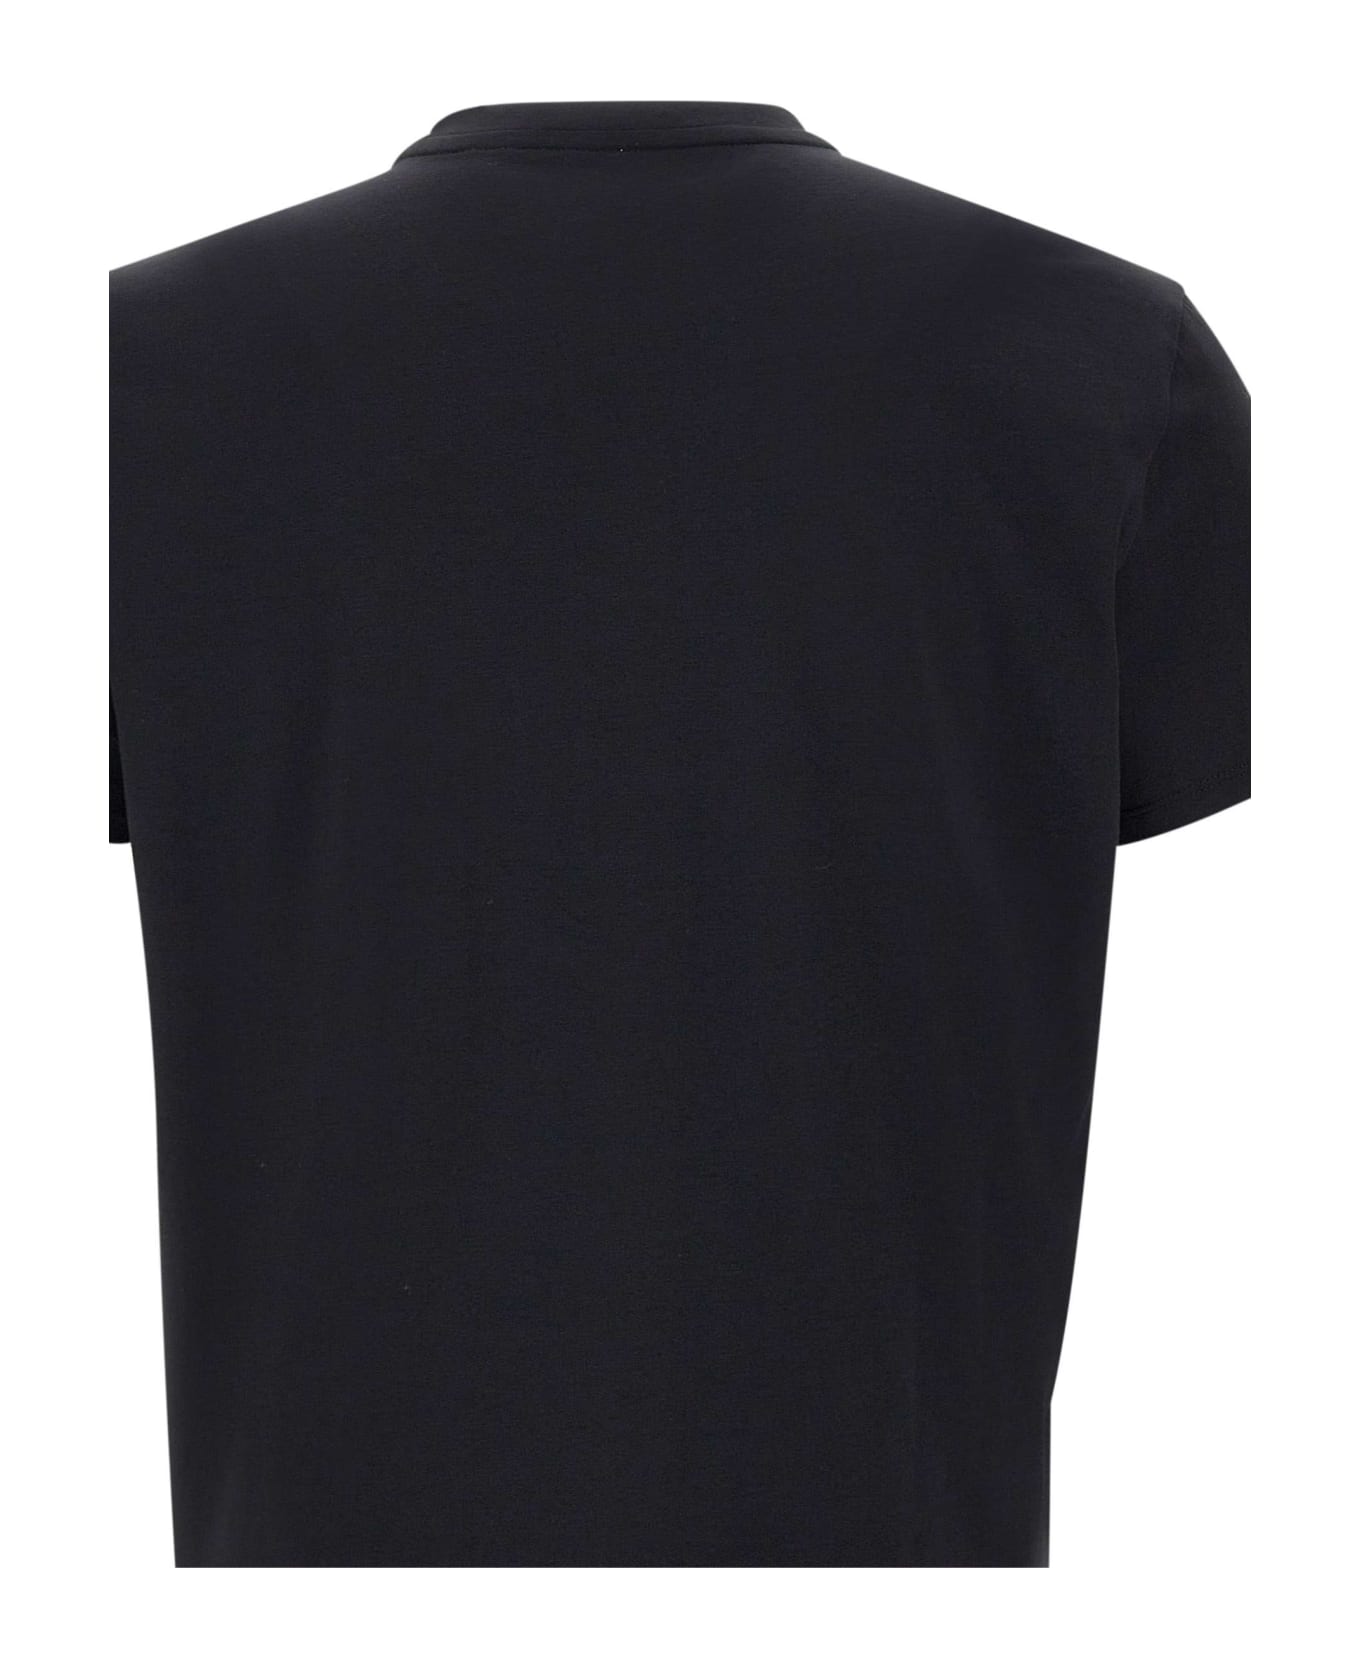 RRD - Roberto Ricci Design 'revo Shirty' T-shirt シャツ